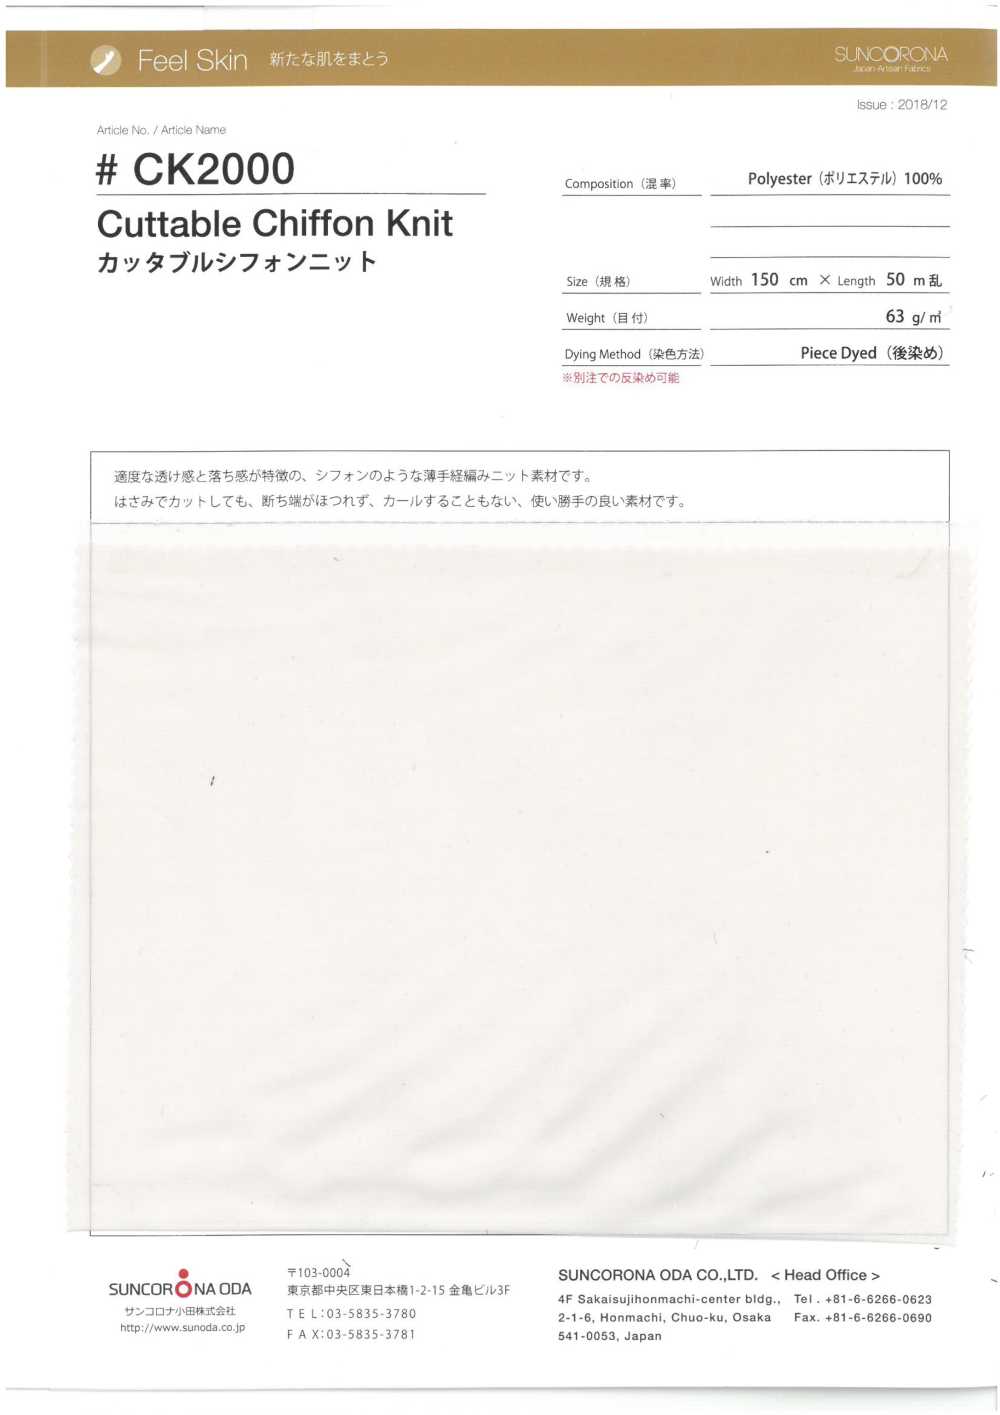 CK2000 Zuschneidbarer Chiffon-Strick[Textilgewebe] Suncorona Oda